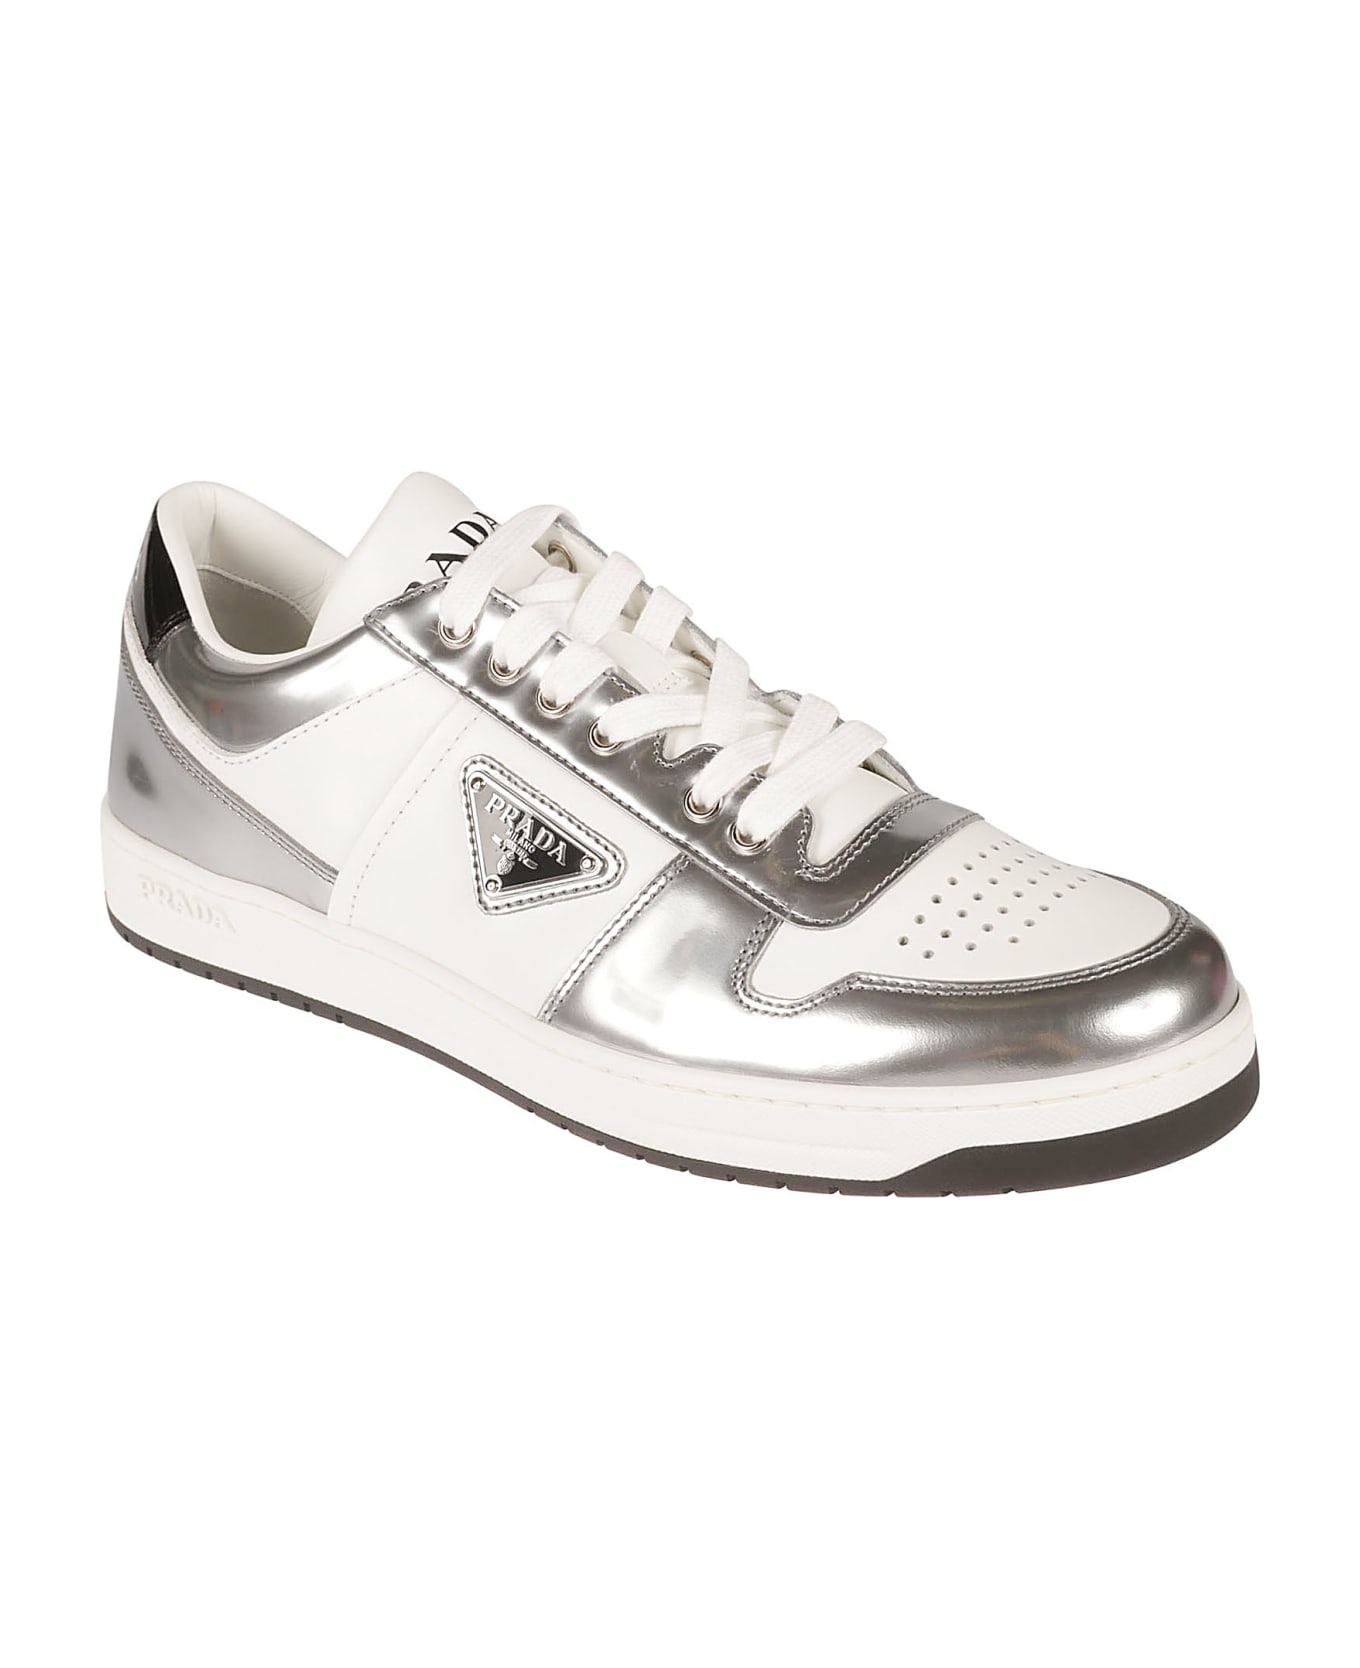 Prada Logo Sided Paneled Sneakers - White/Silver